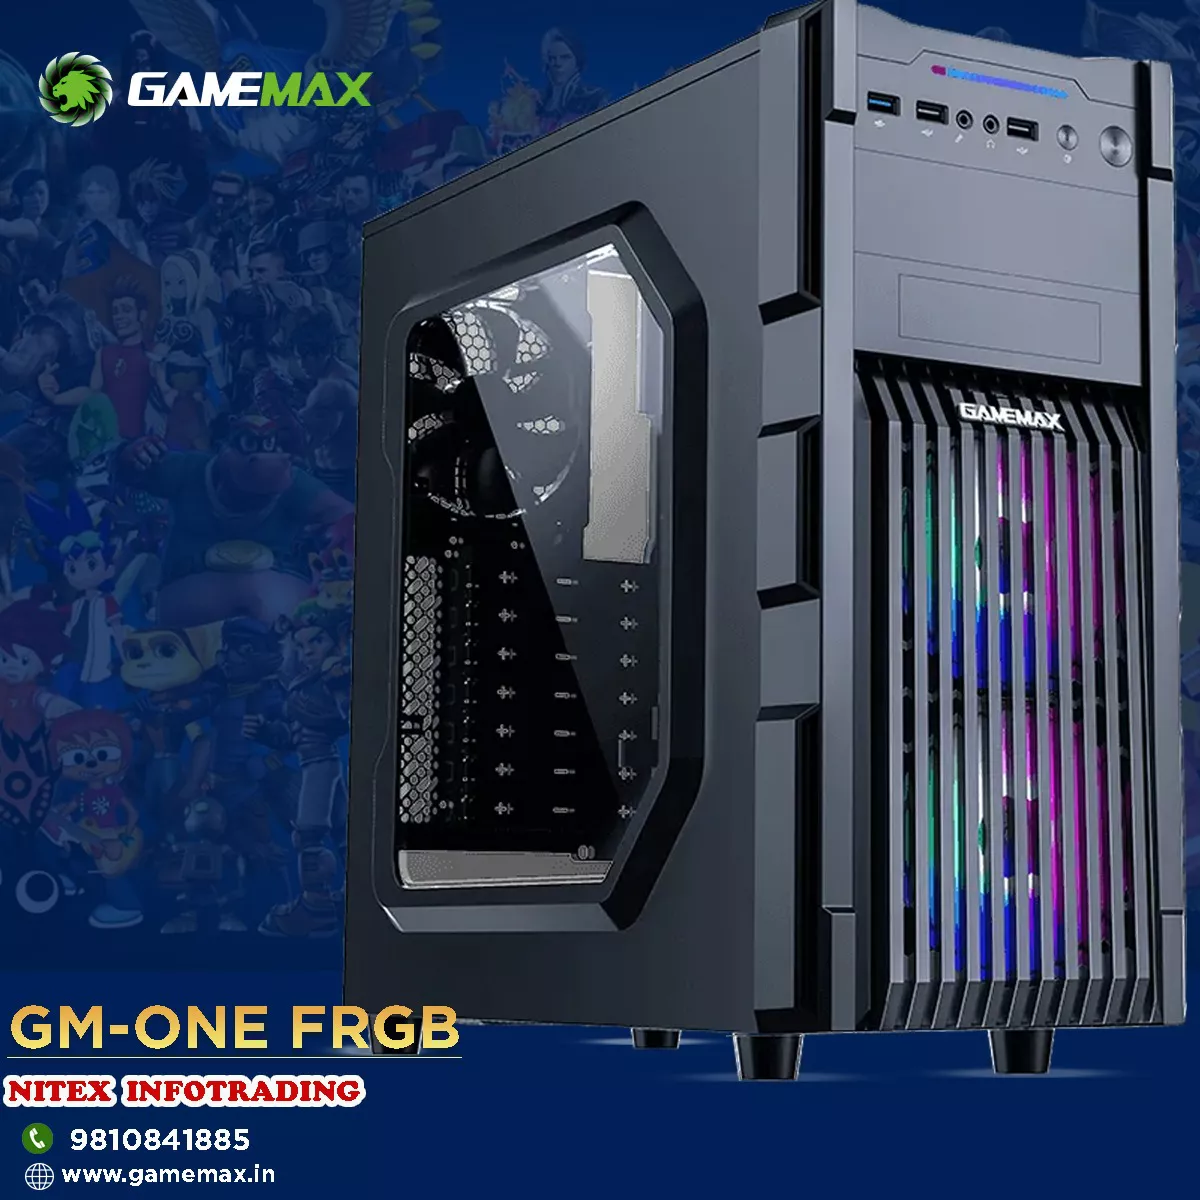 GameMax GM-ONE